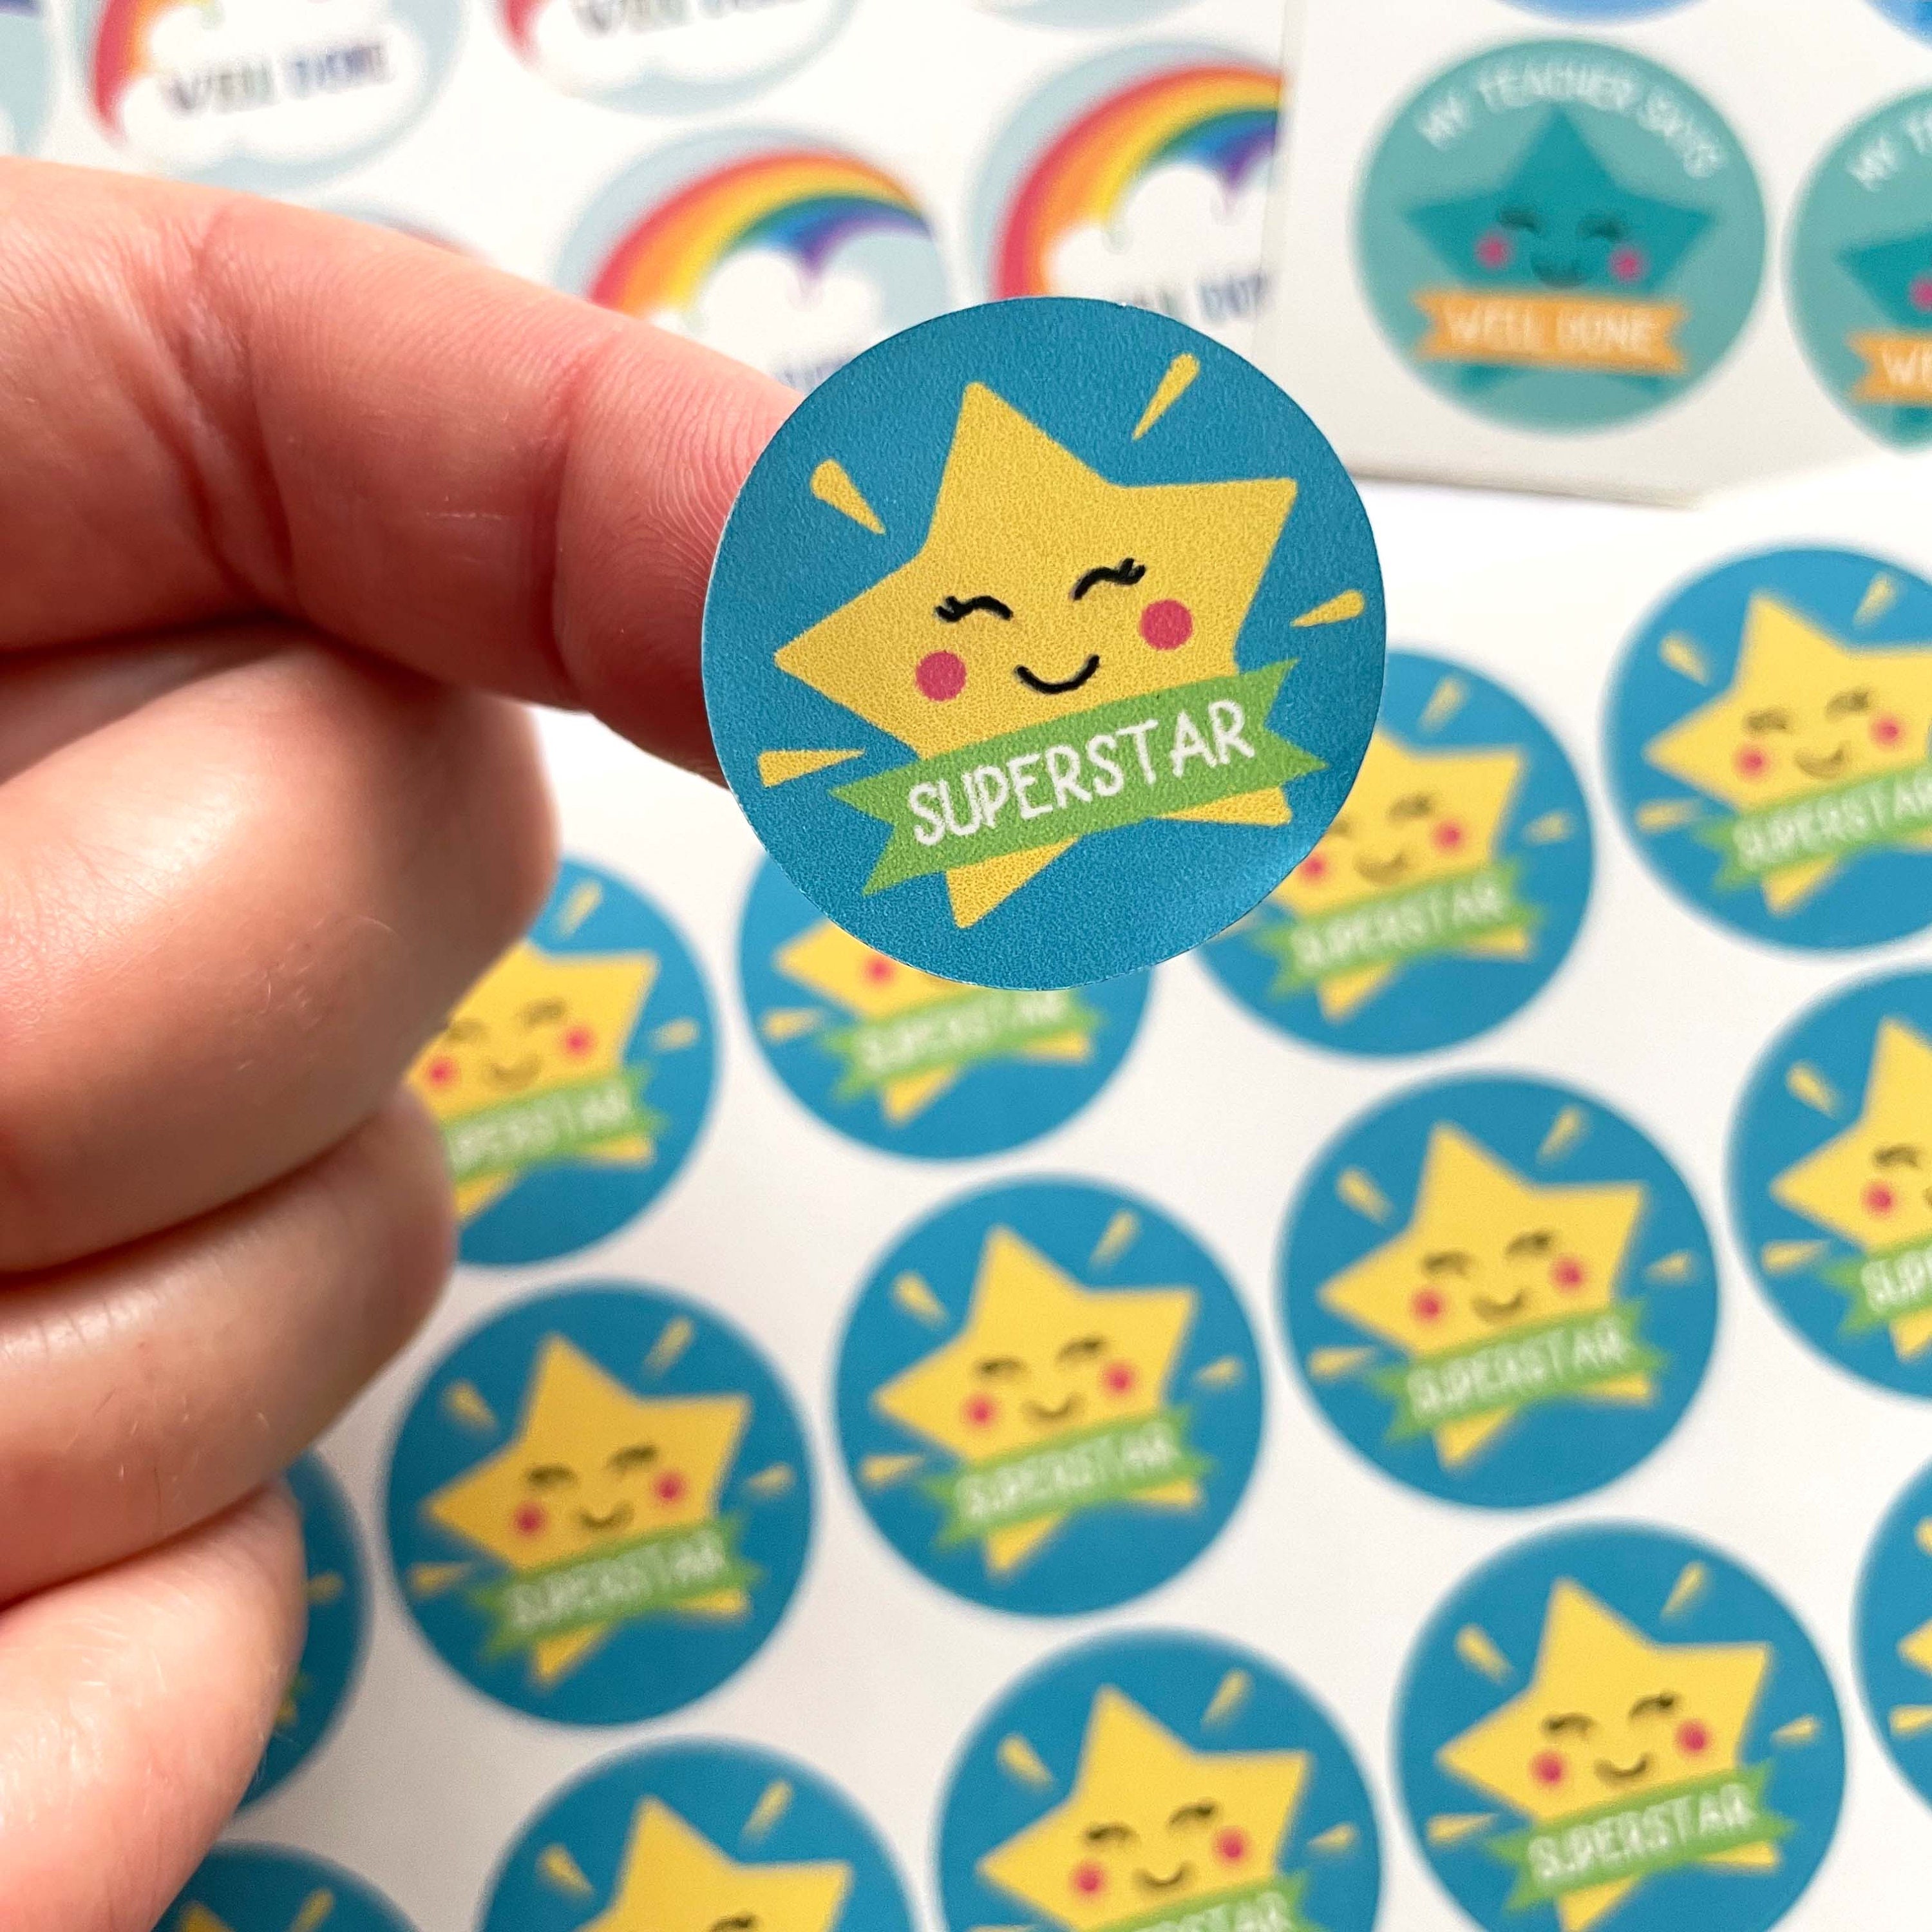 Star stickers for rewarding